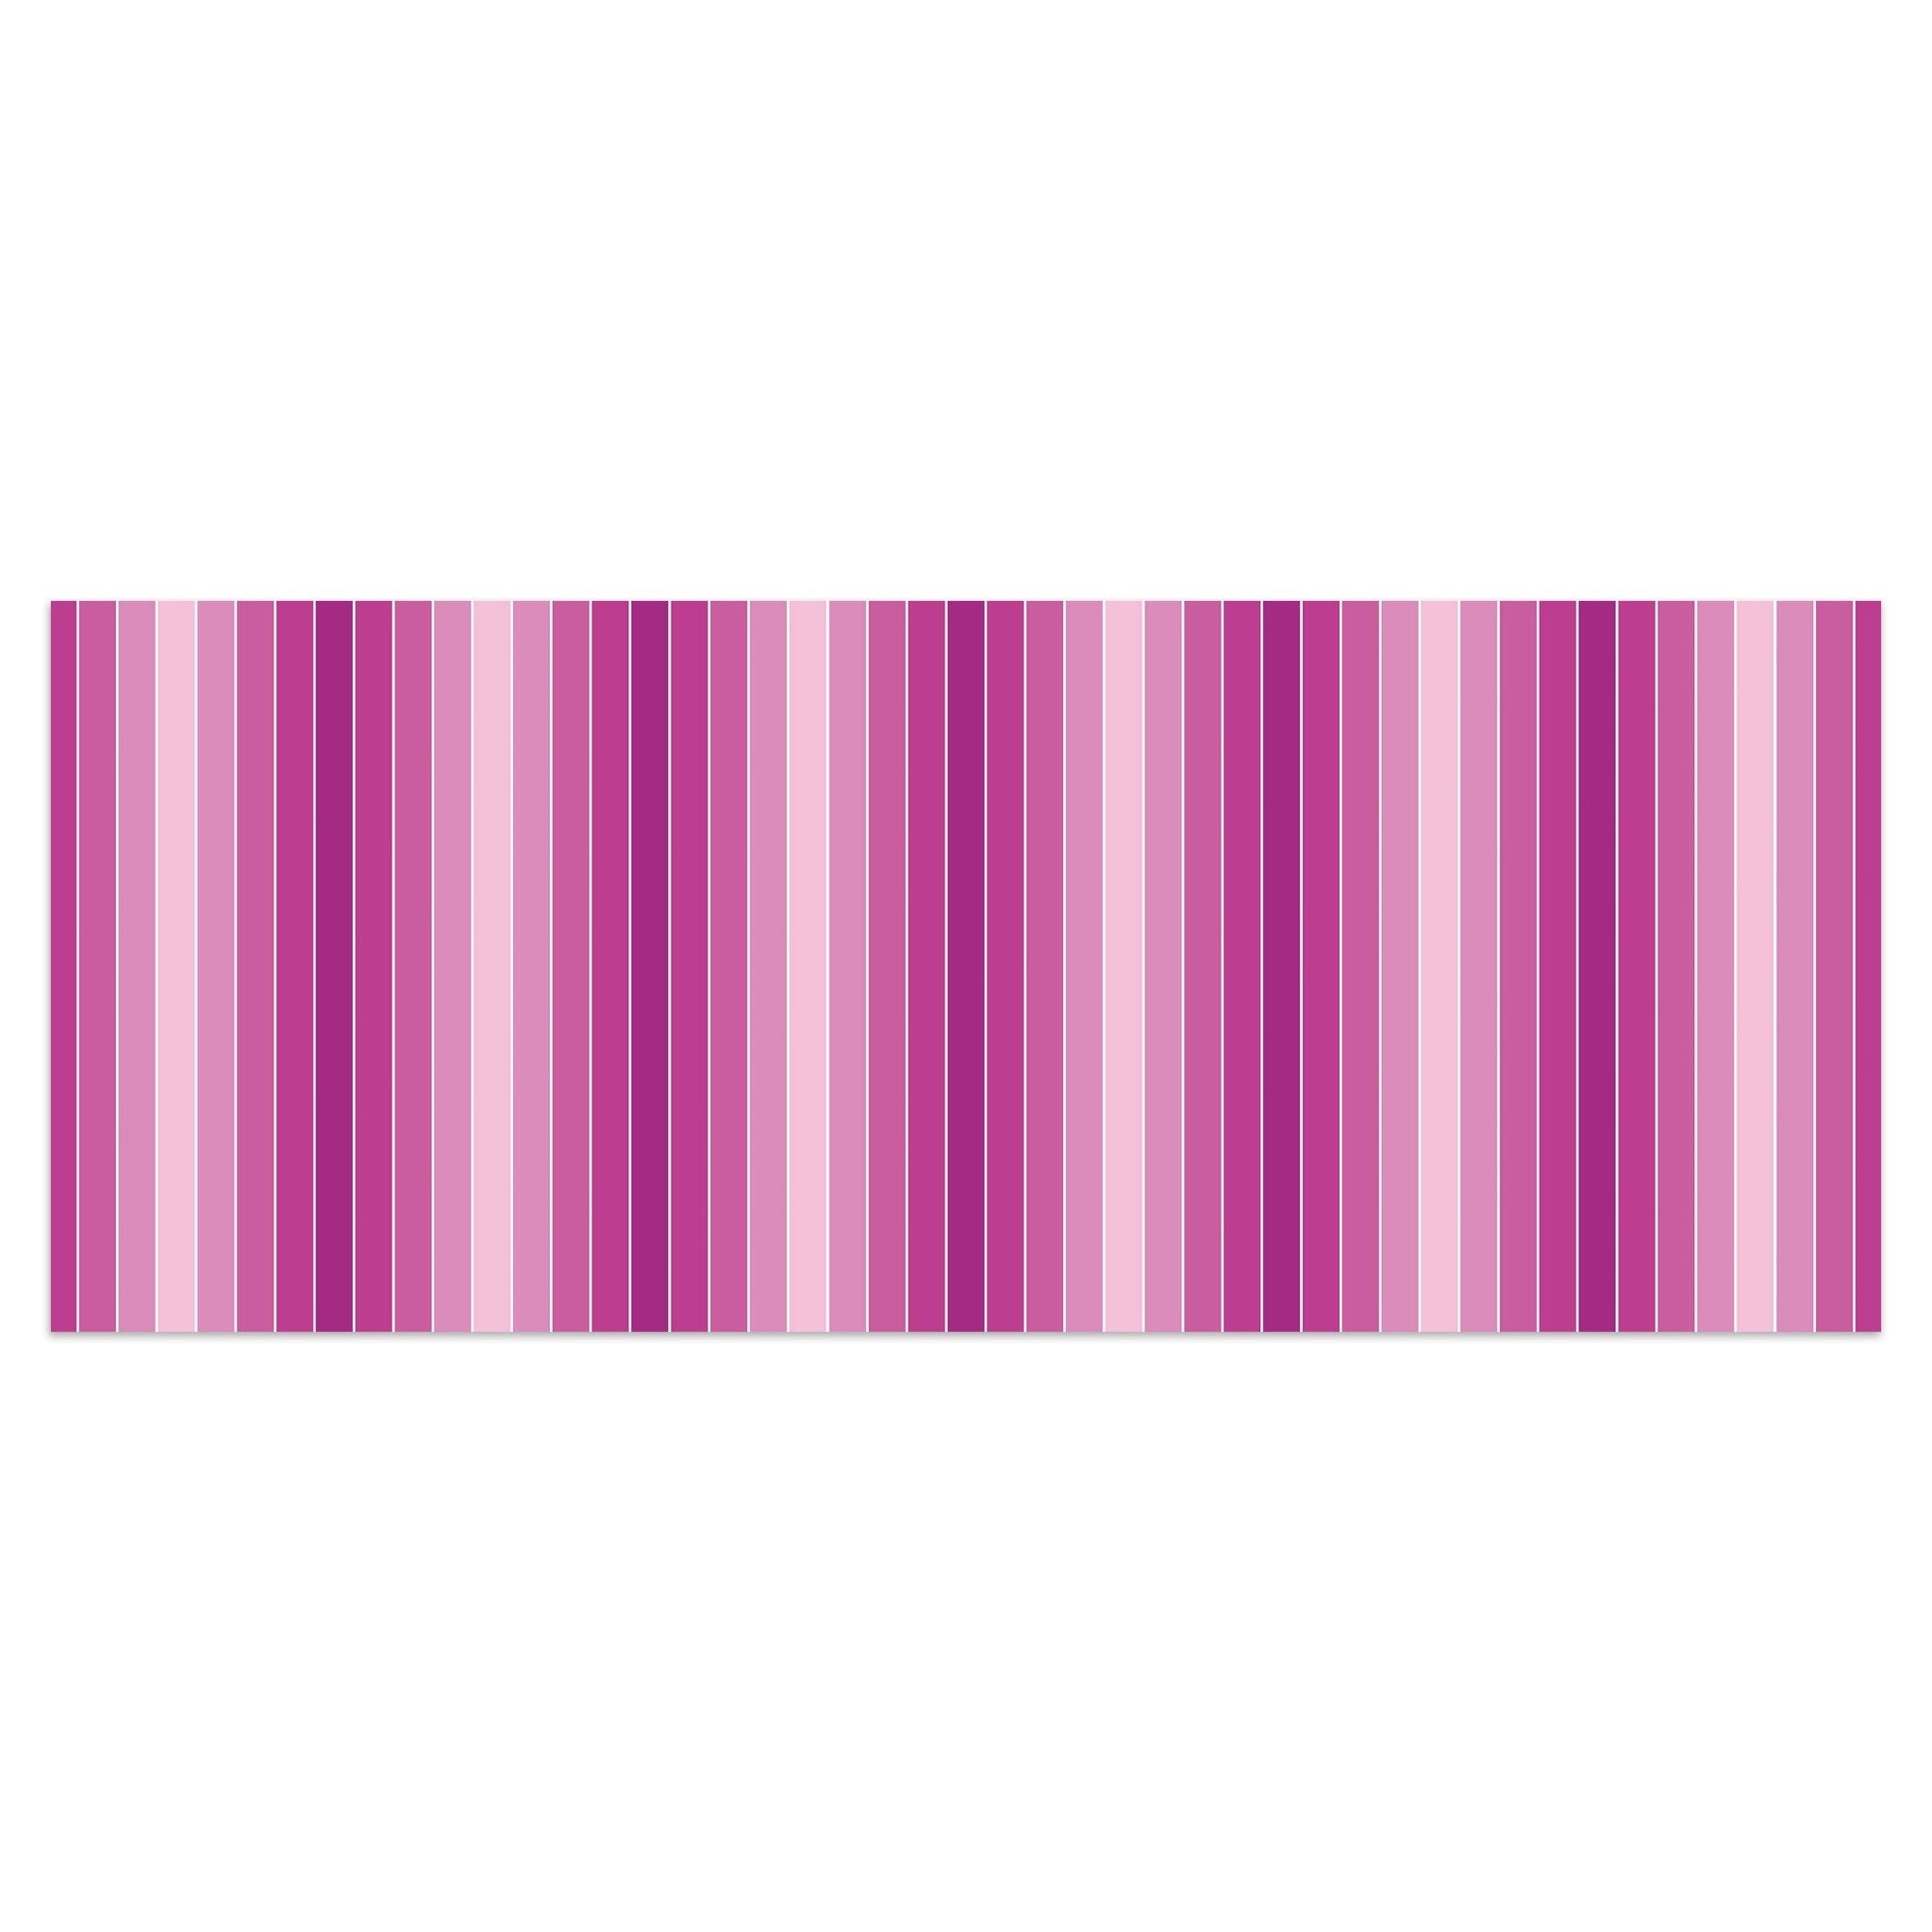 Leinwandbild Pink Muster M0096 kaufen - Bild 1